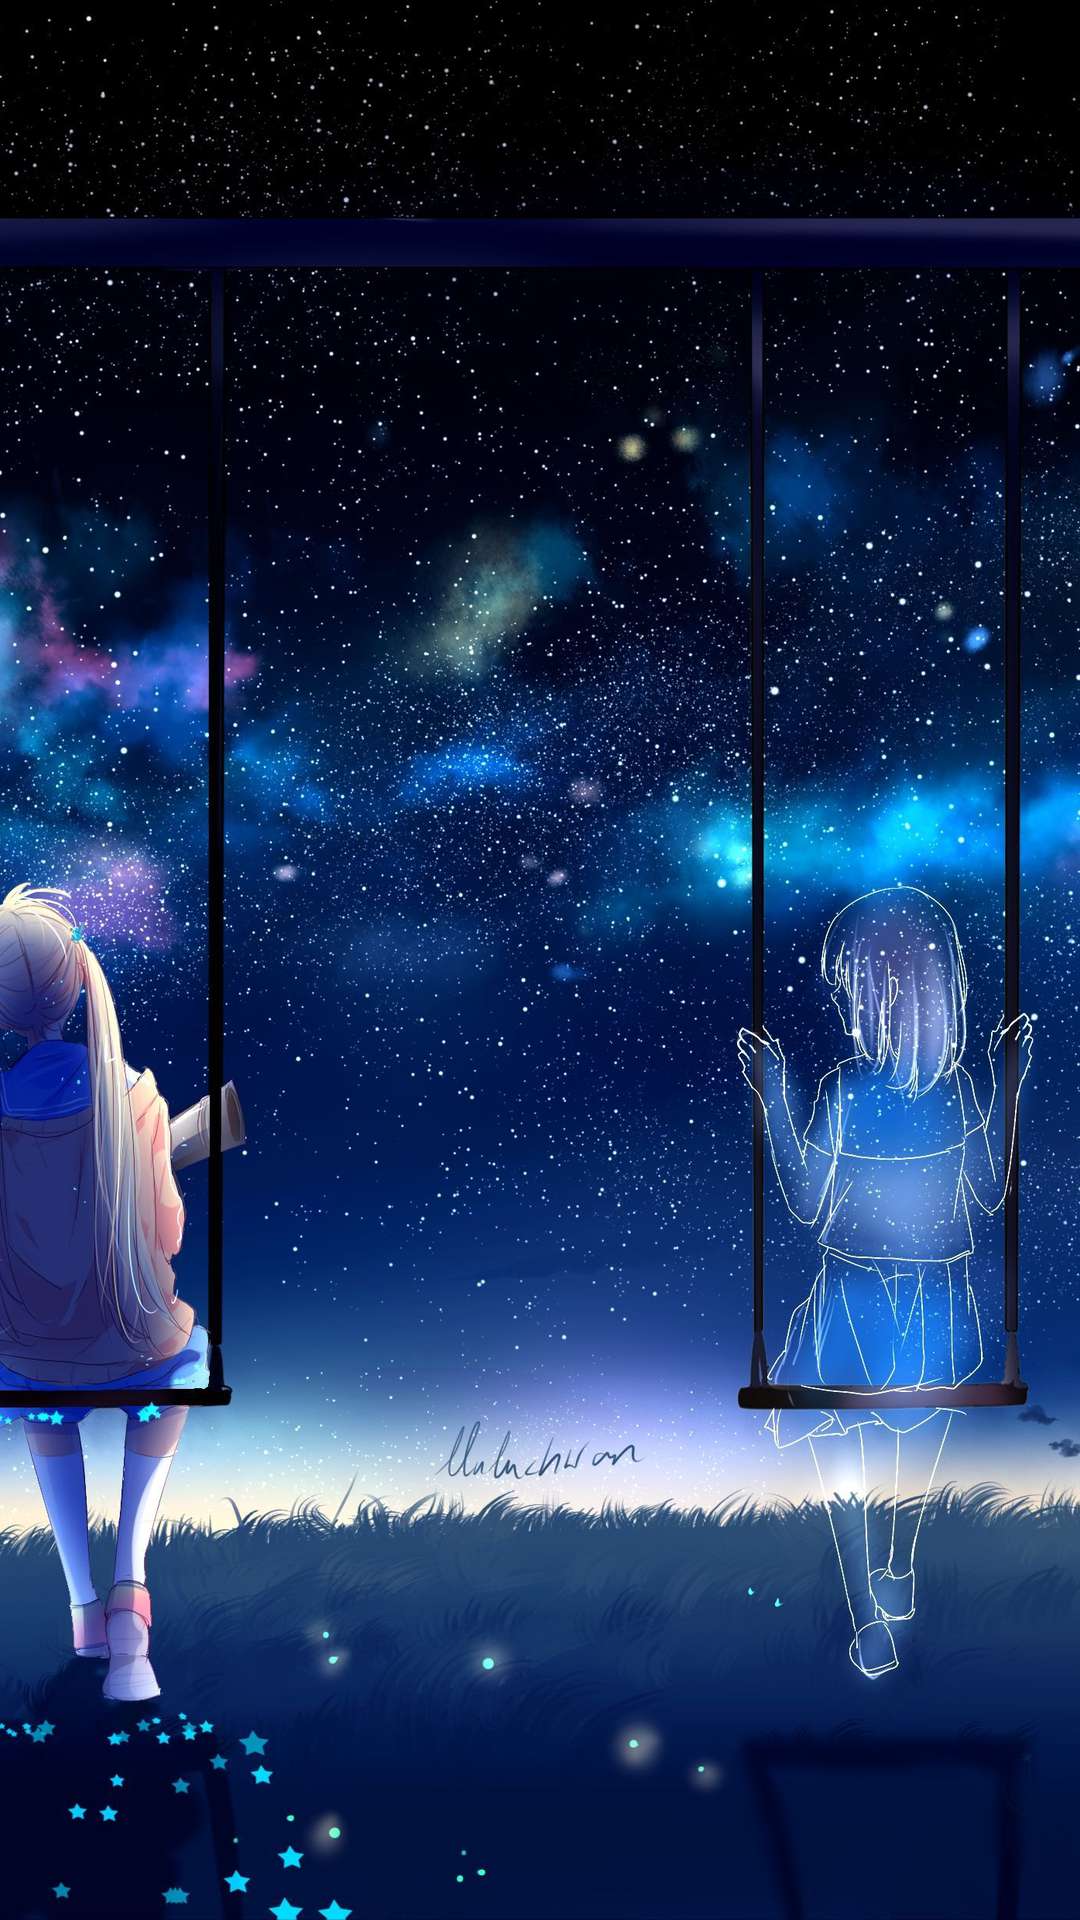 Wallpaper ID 70559  anime girl anime sad alone artist artwork  digital art hd 4k free download